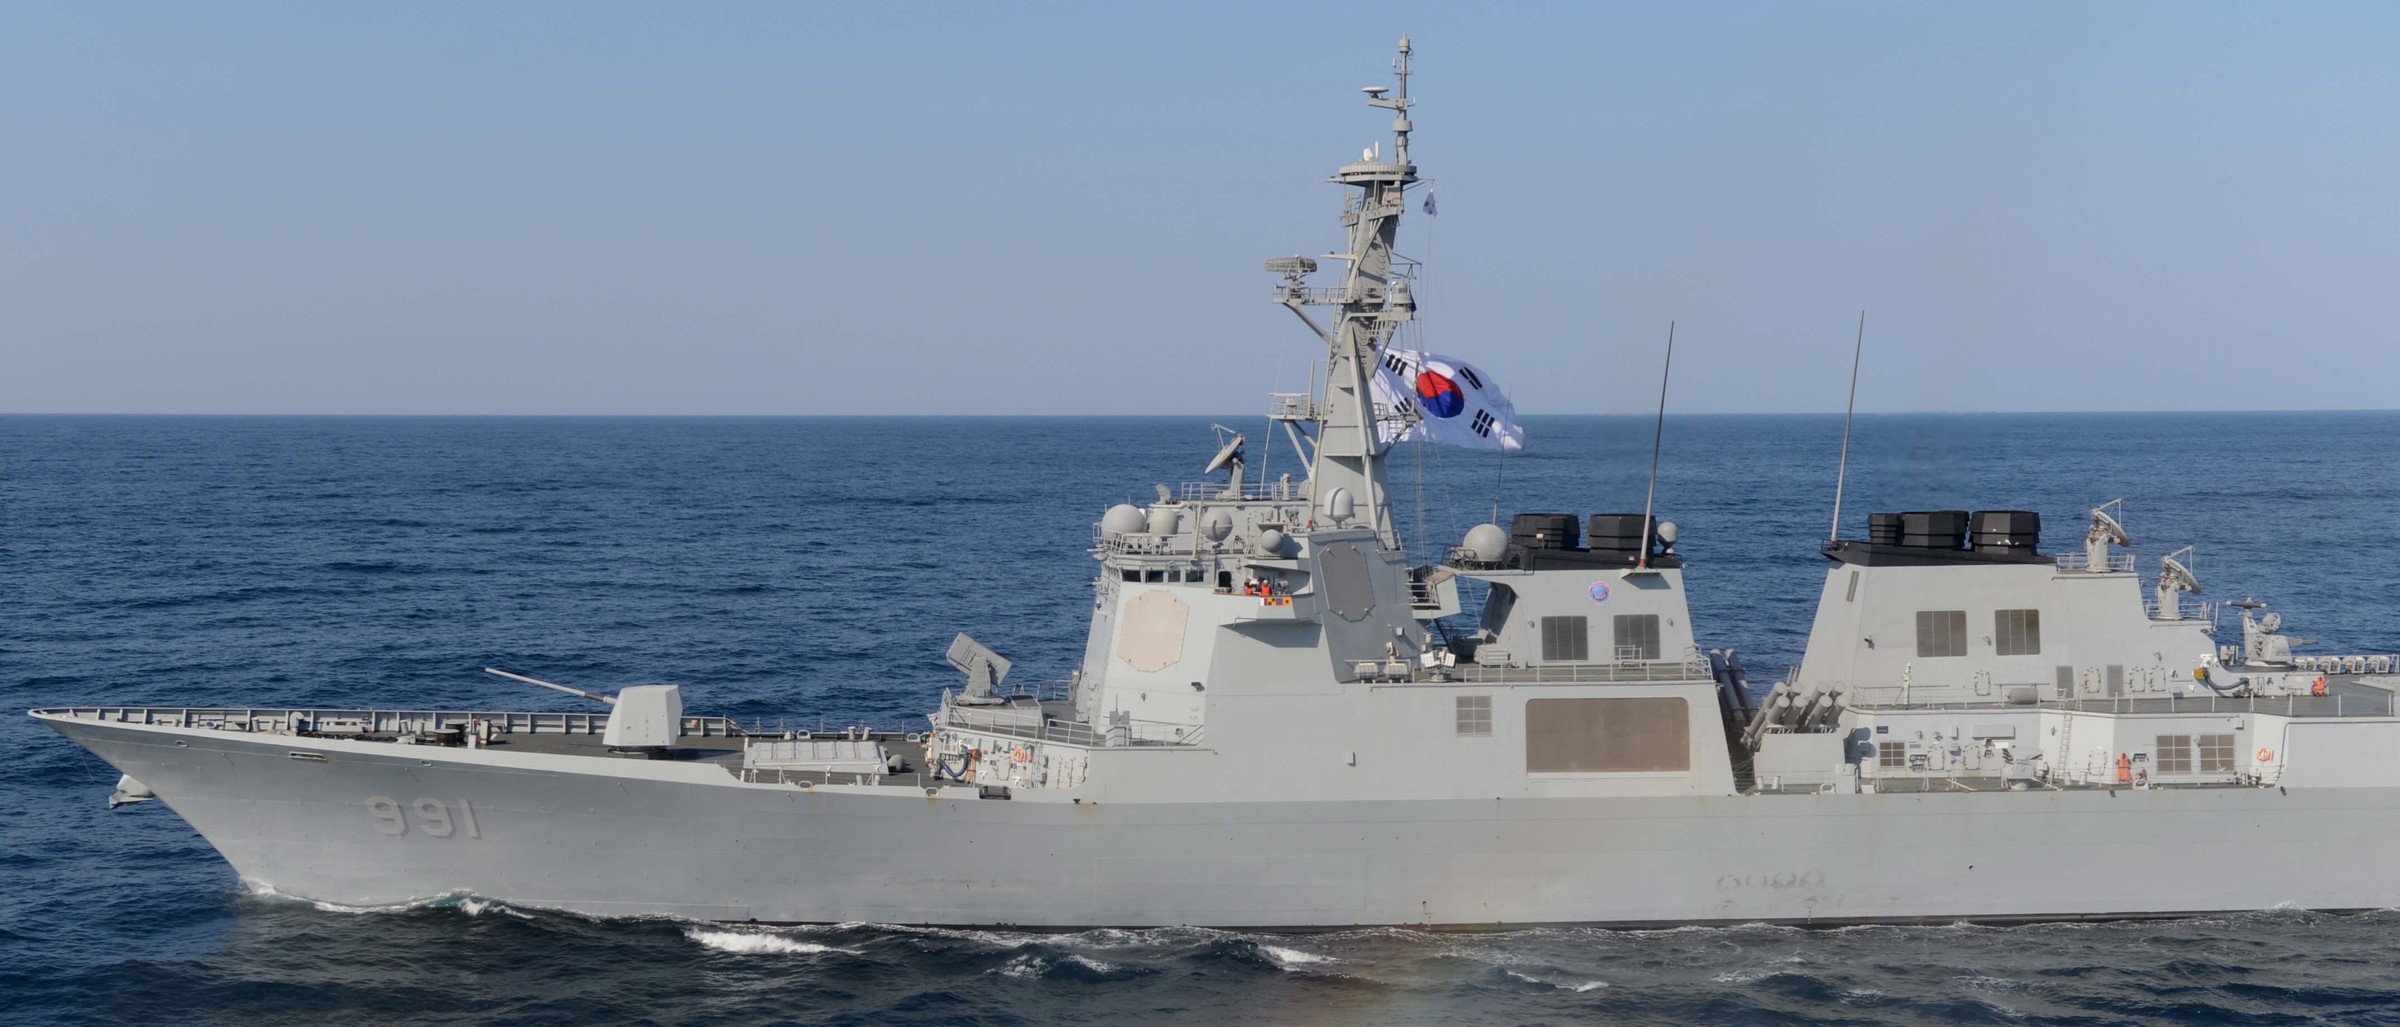 ddg-991 roks sejong the great guided missile destroyer aegis republic of korea navy rok 08